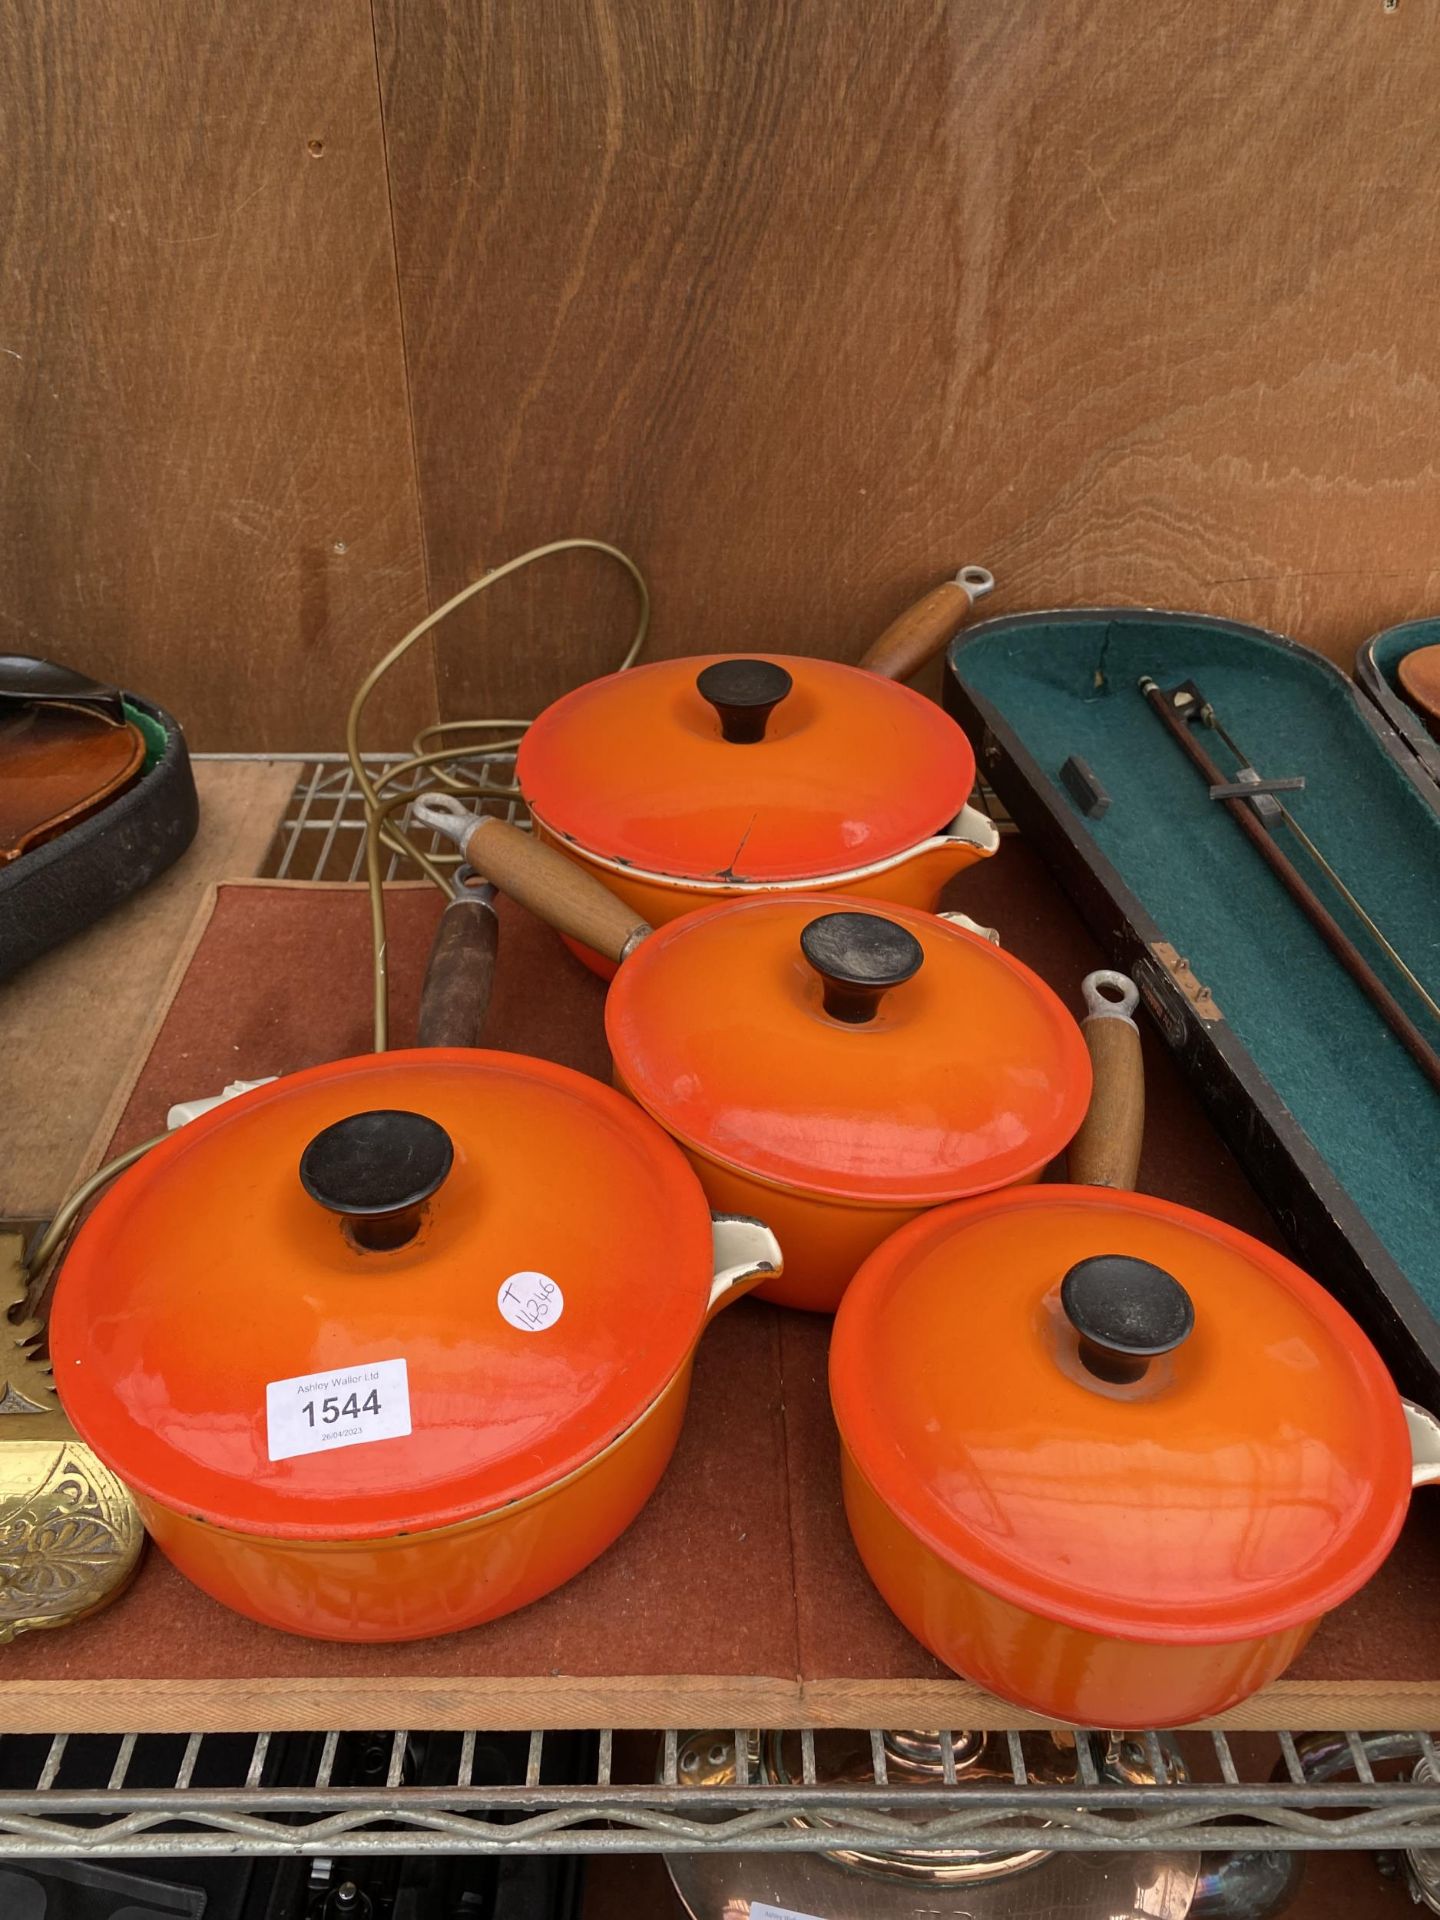 FOUR GRADUATED ORANGE LE CREUSET PANS WITH LIDS AND WOODEN HANDLES